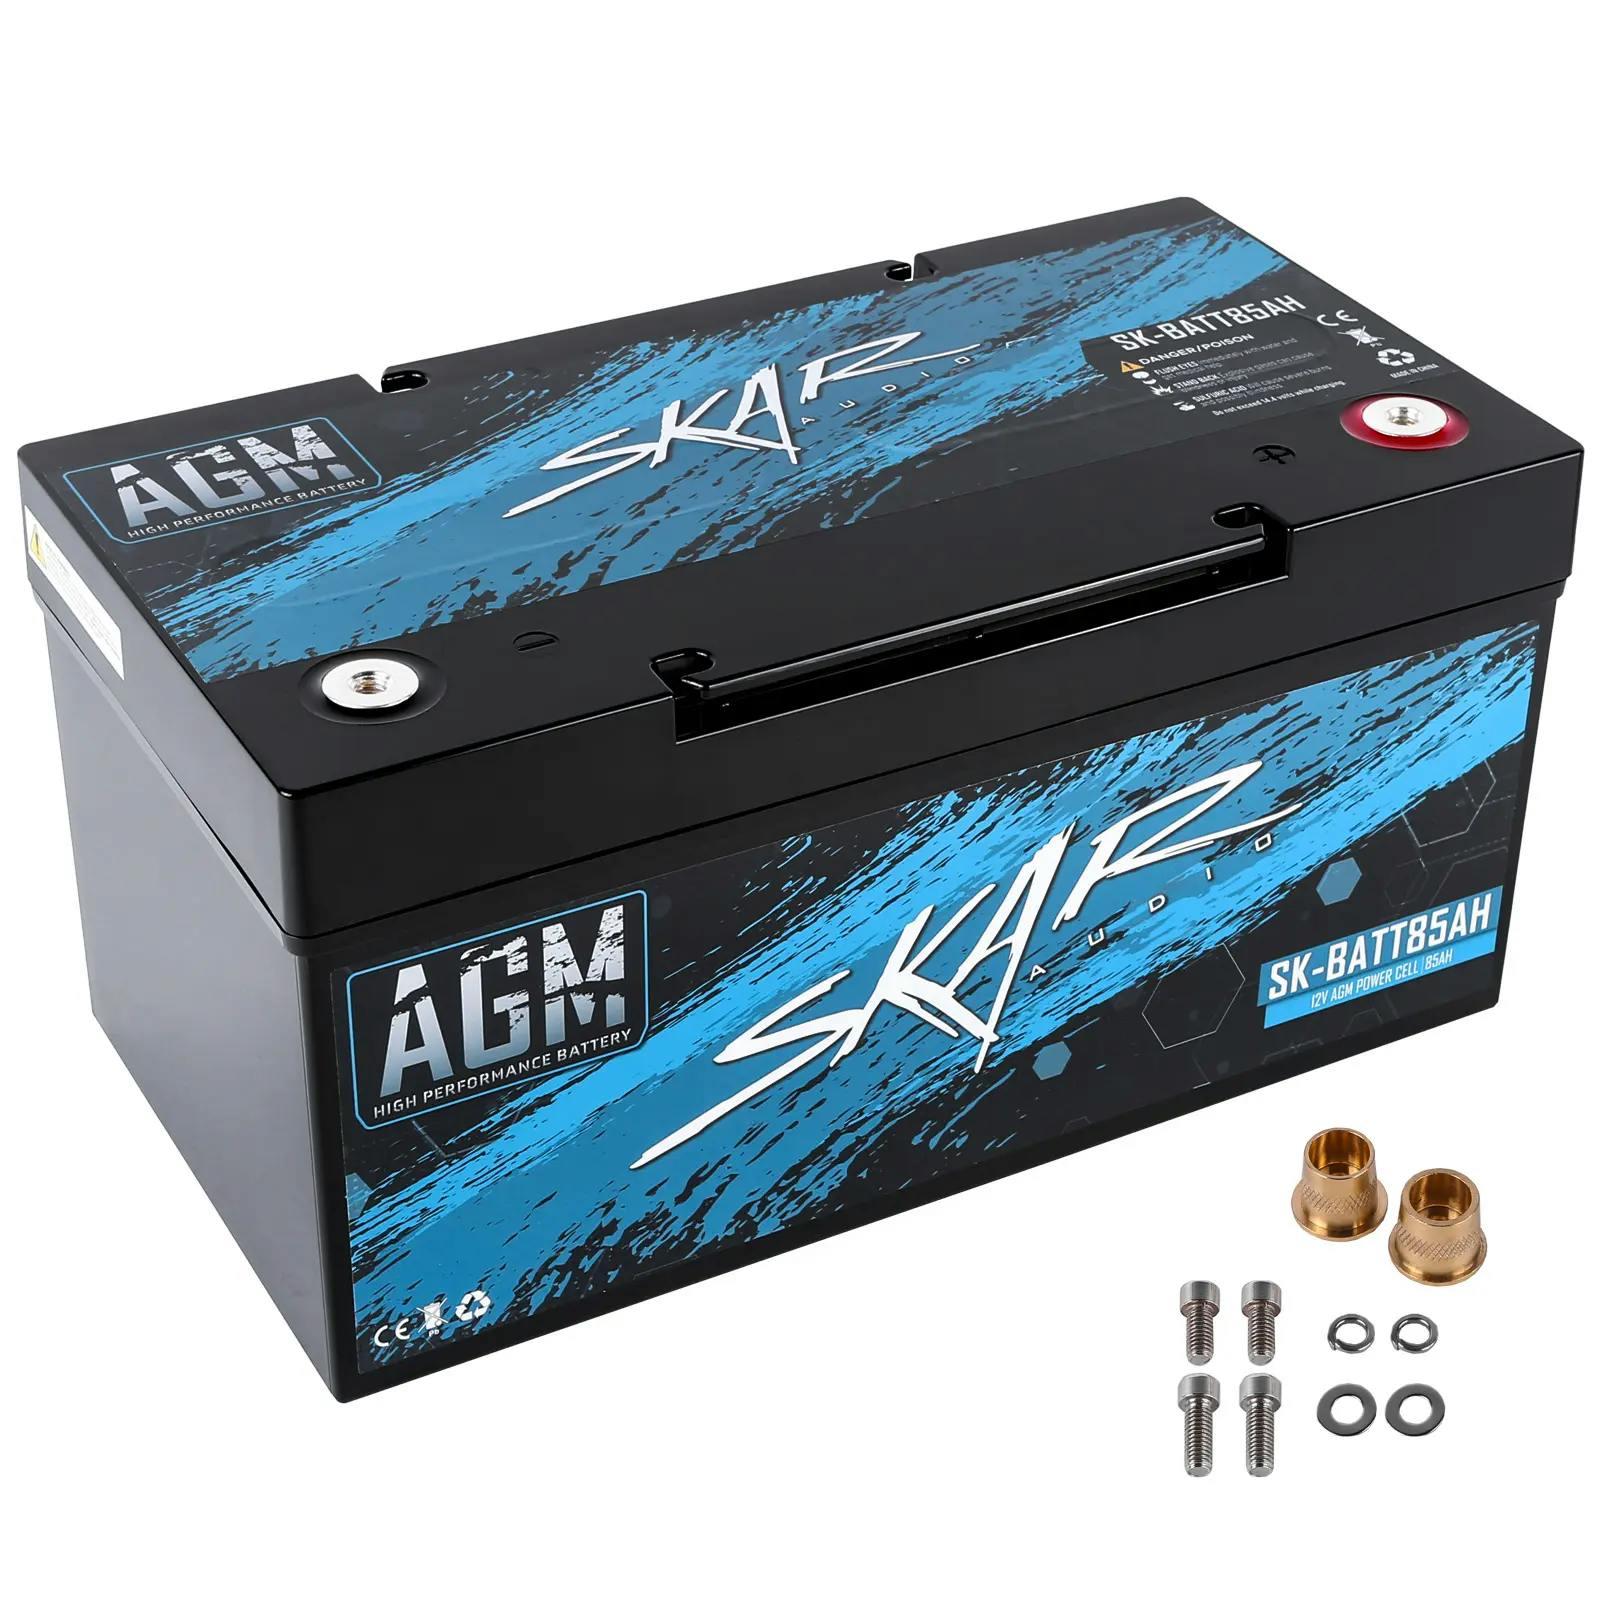 Featured Product Photo for SK-BATT85AH | 12V 85Ah AGM High Performance Car Audio Battery